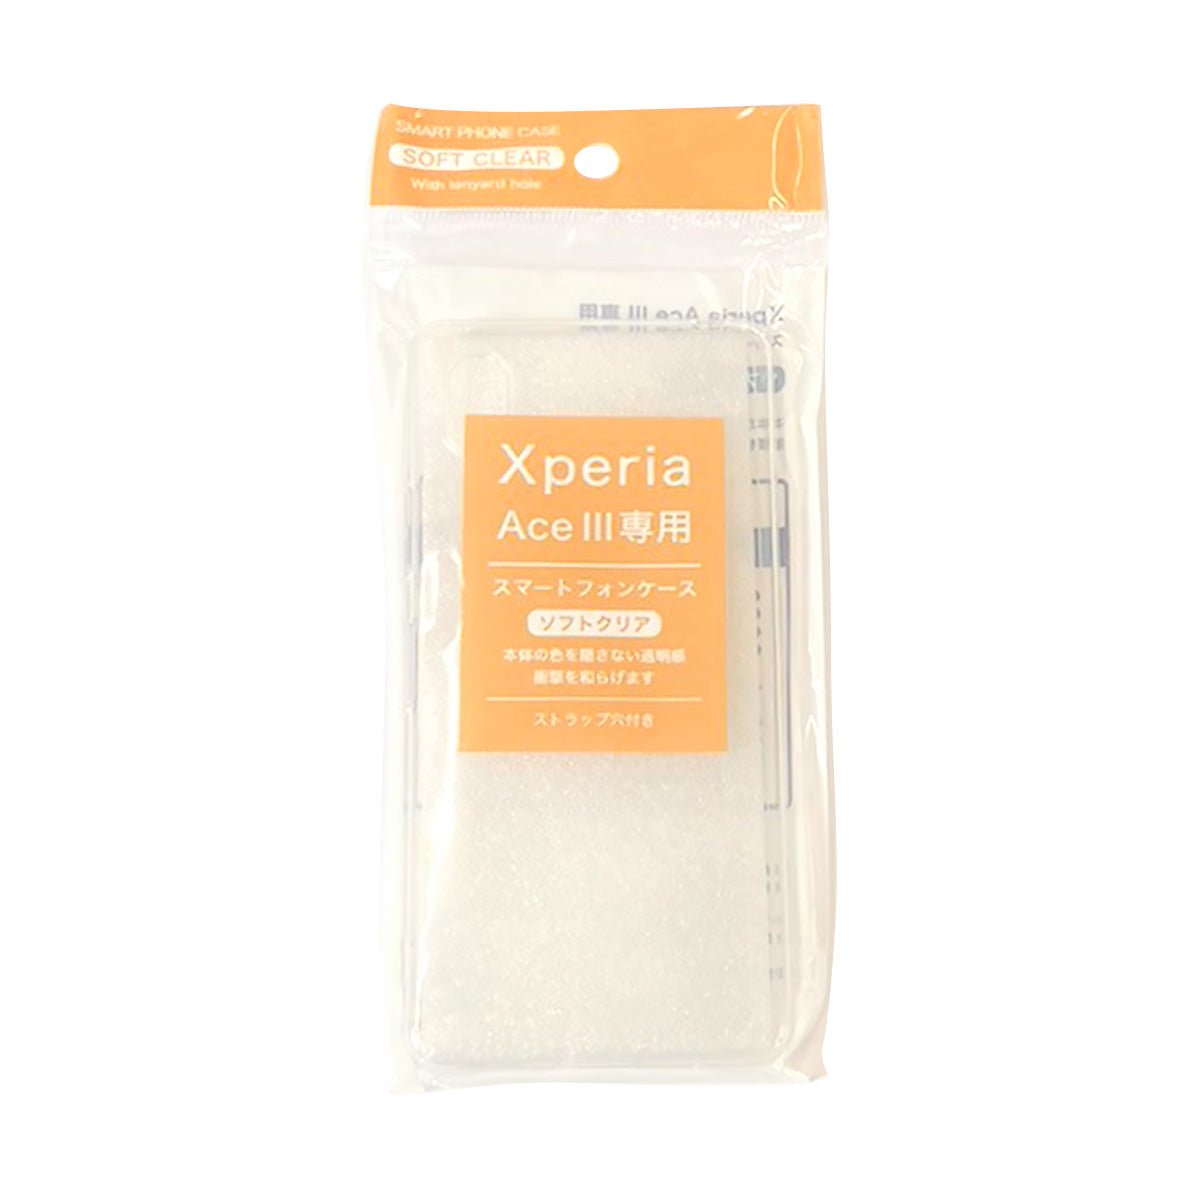 Xperia ACEiii スマートフォンケース 350673